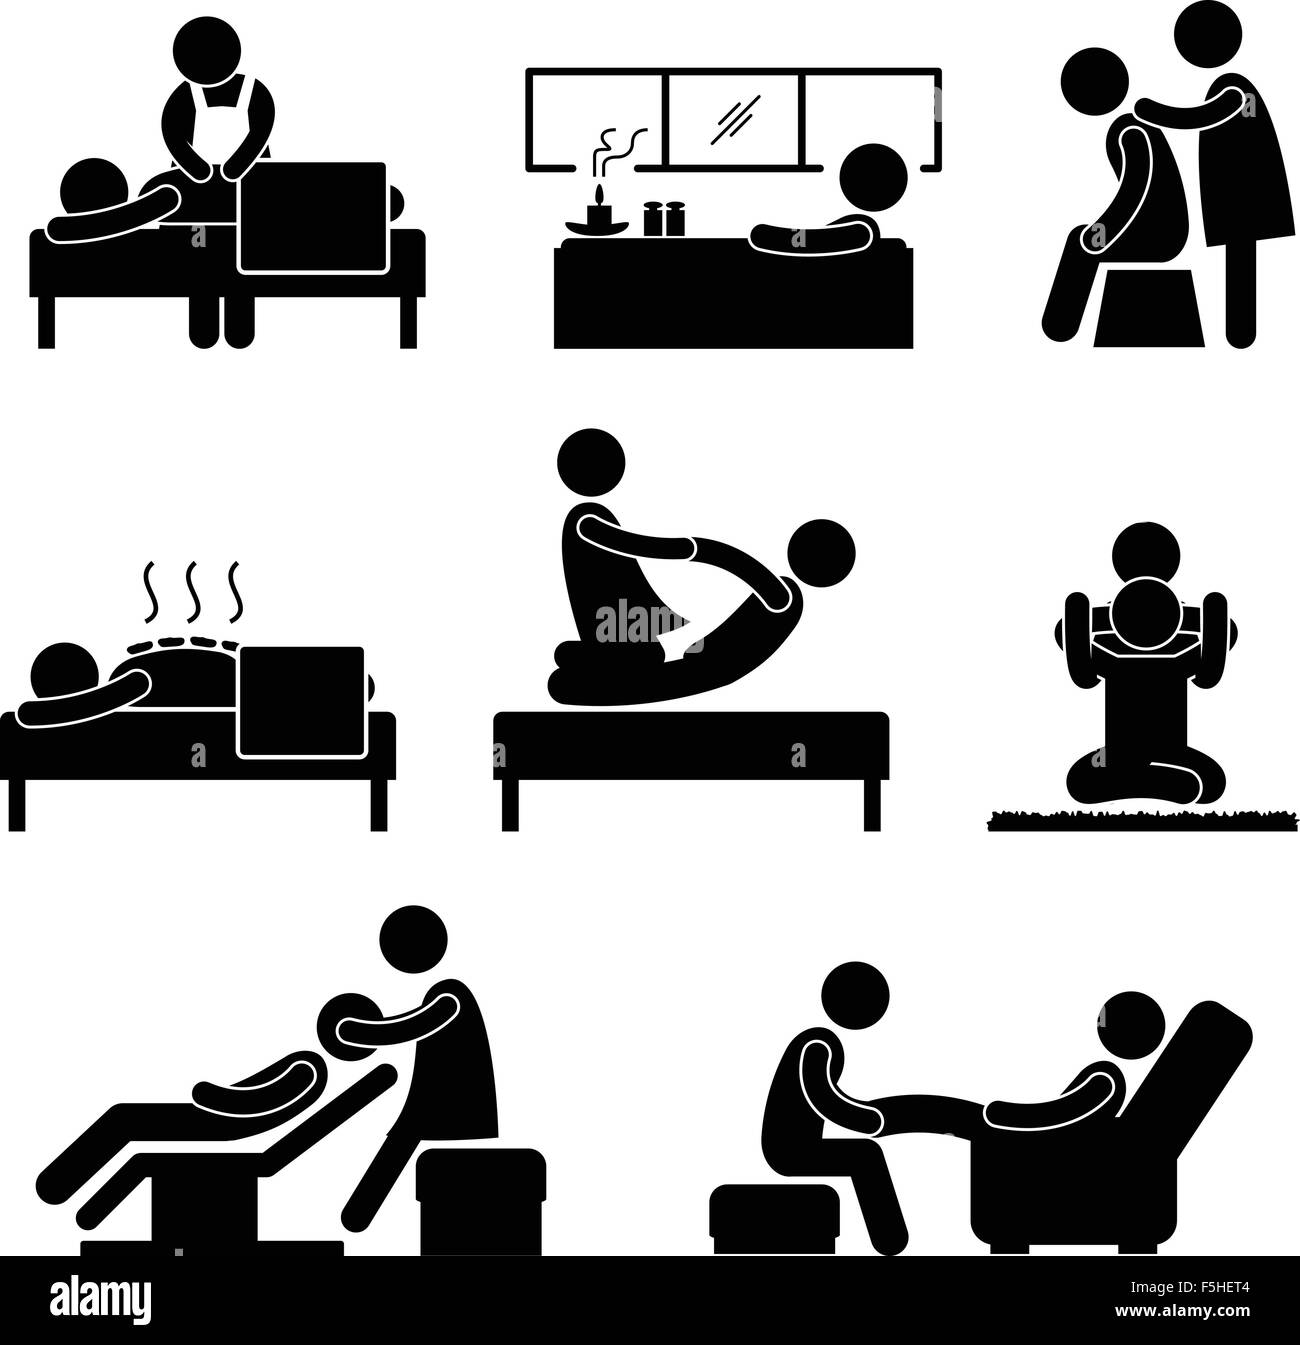 Massage-Spa-Therapie Wellness Aromatherapie Symbol Zeichen Piktogramm  Stock-Vektorgrafik - Alamy